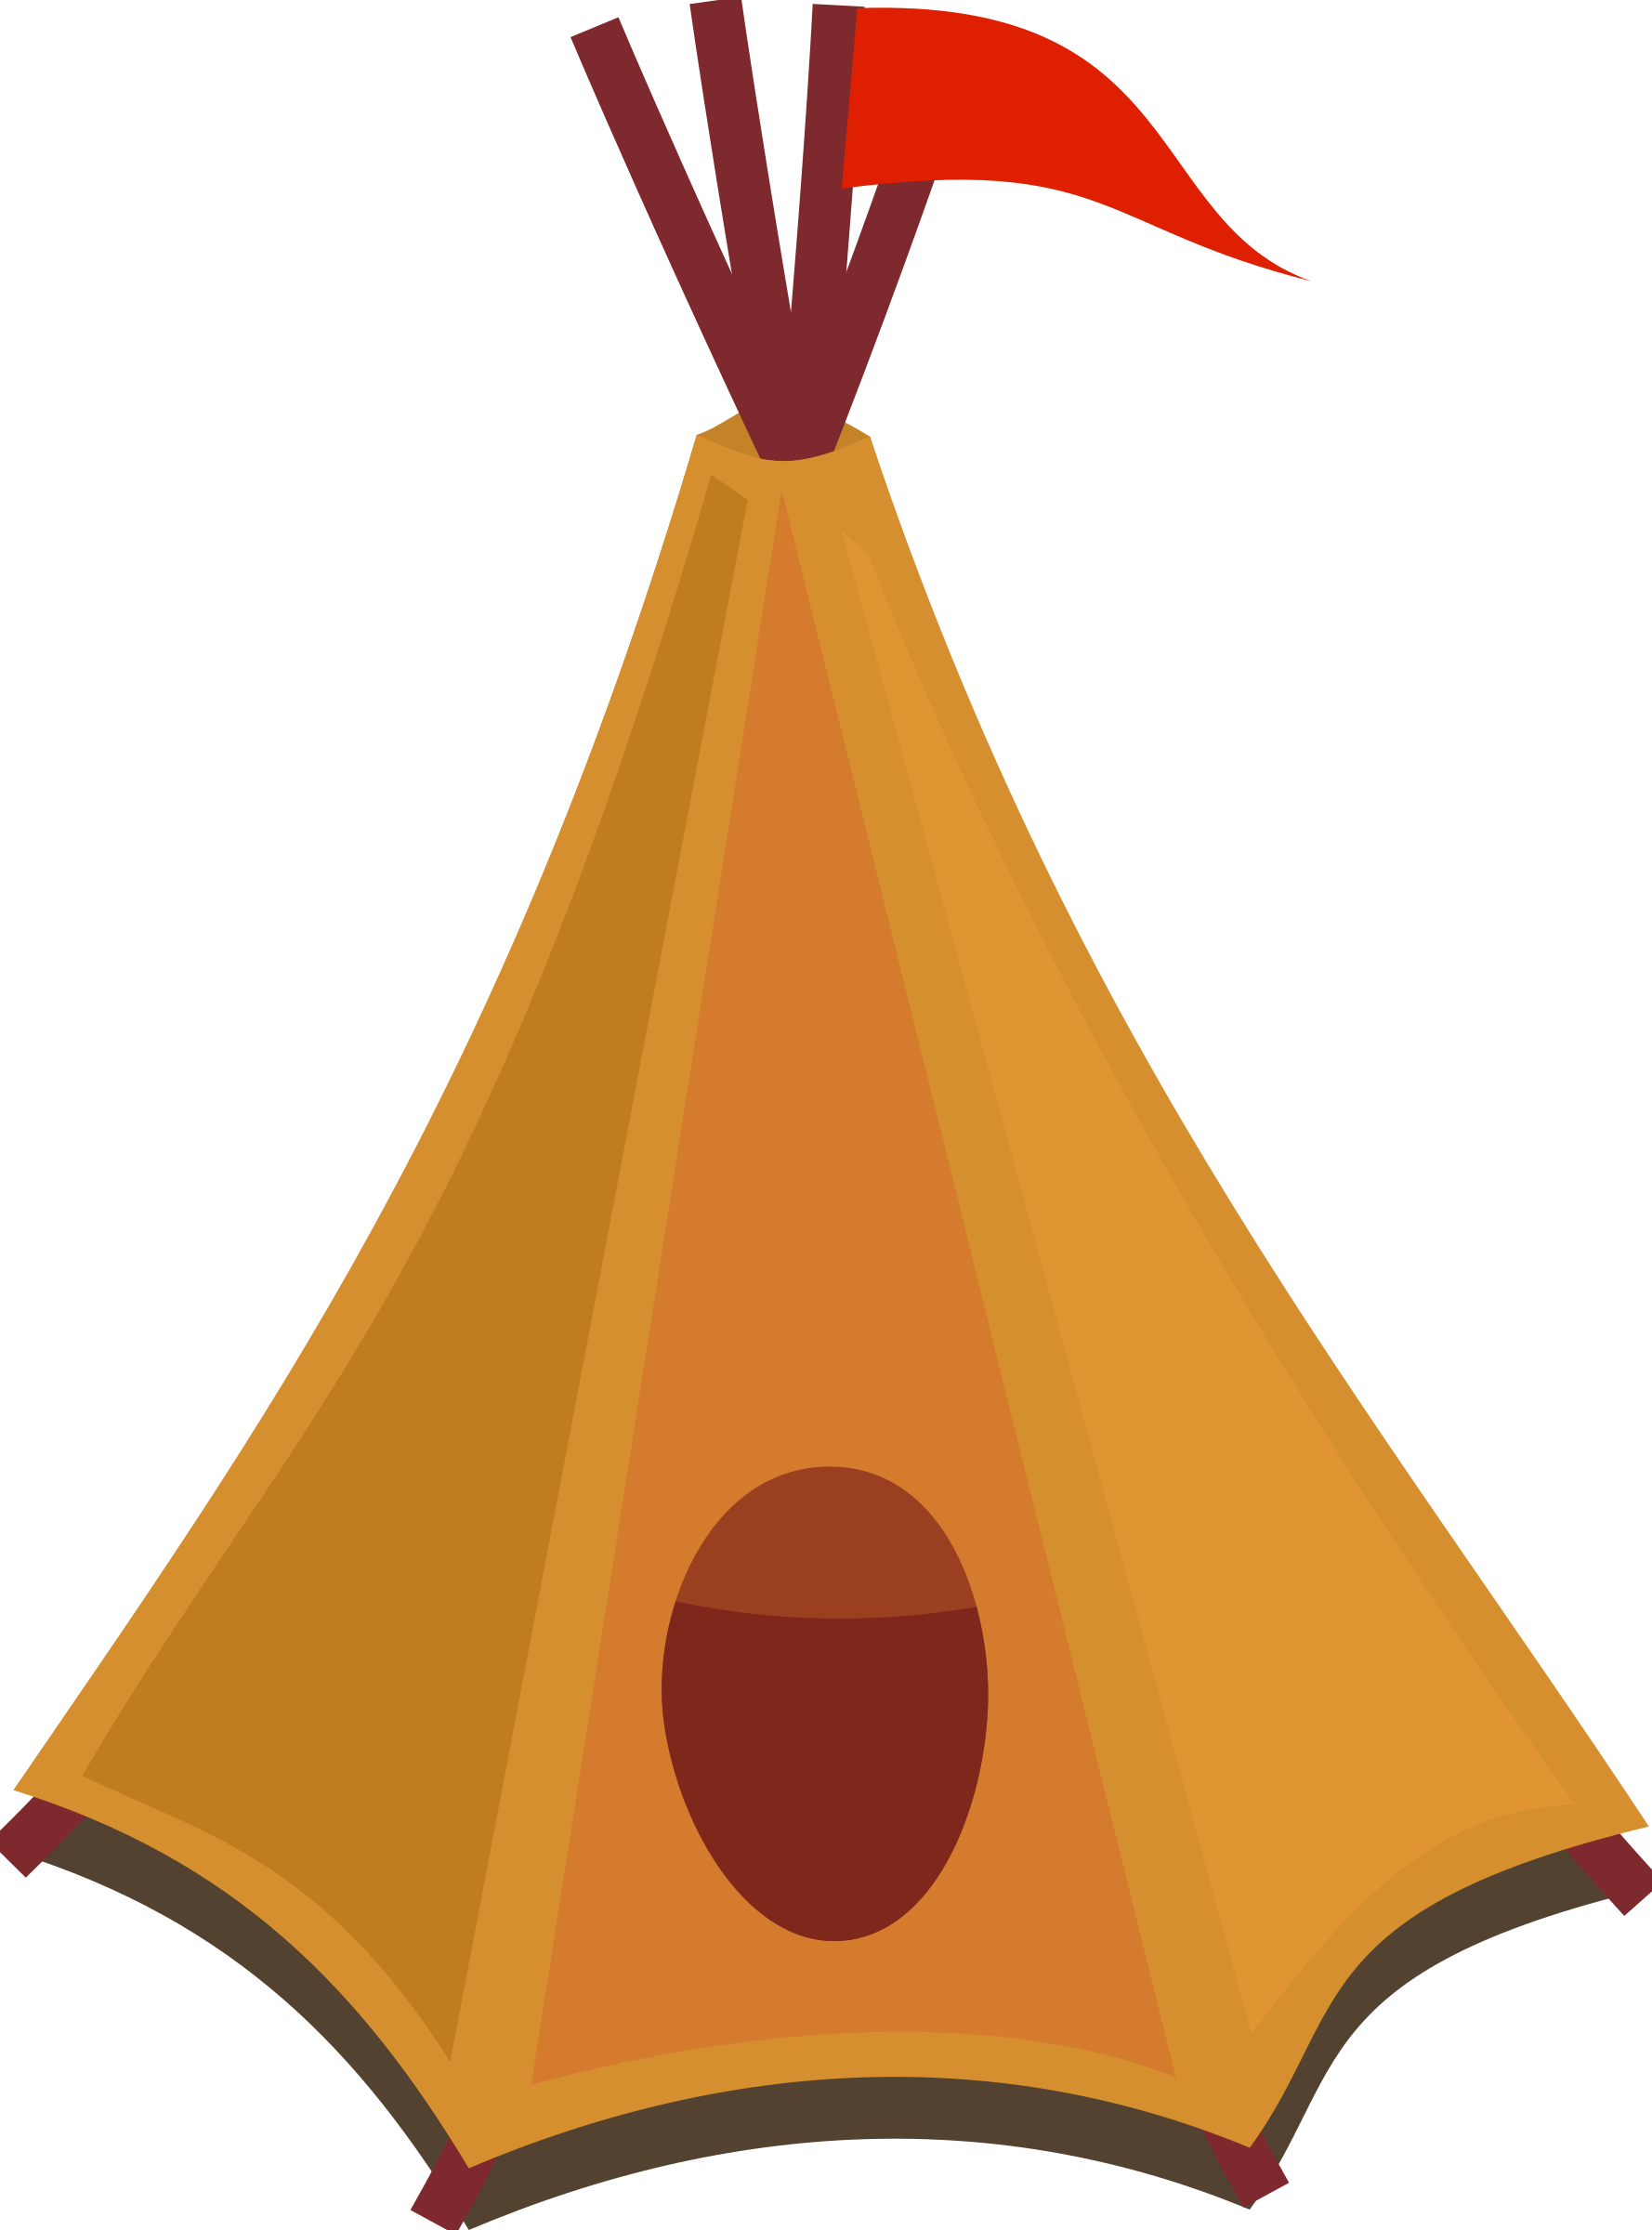 Triangular cartoon